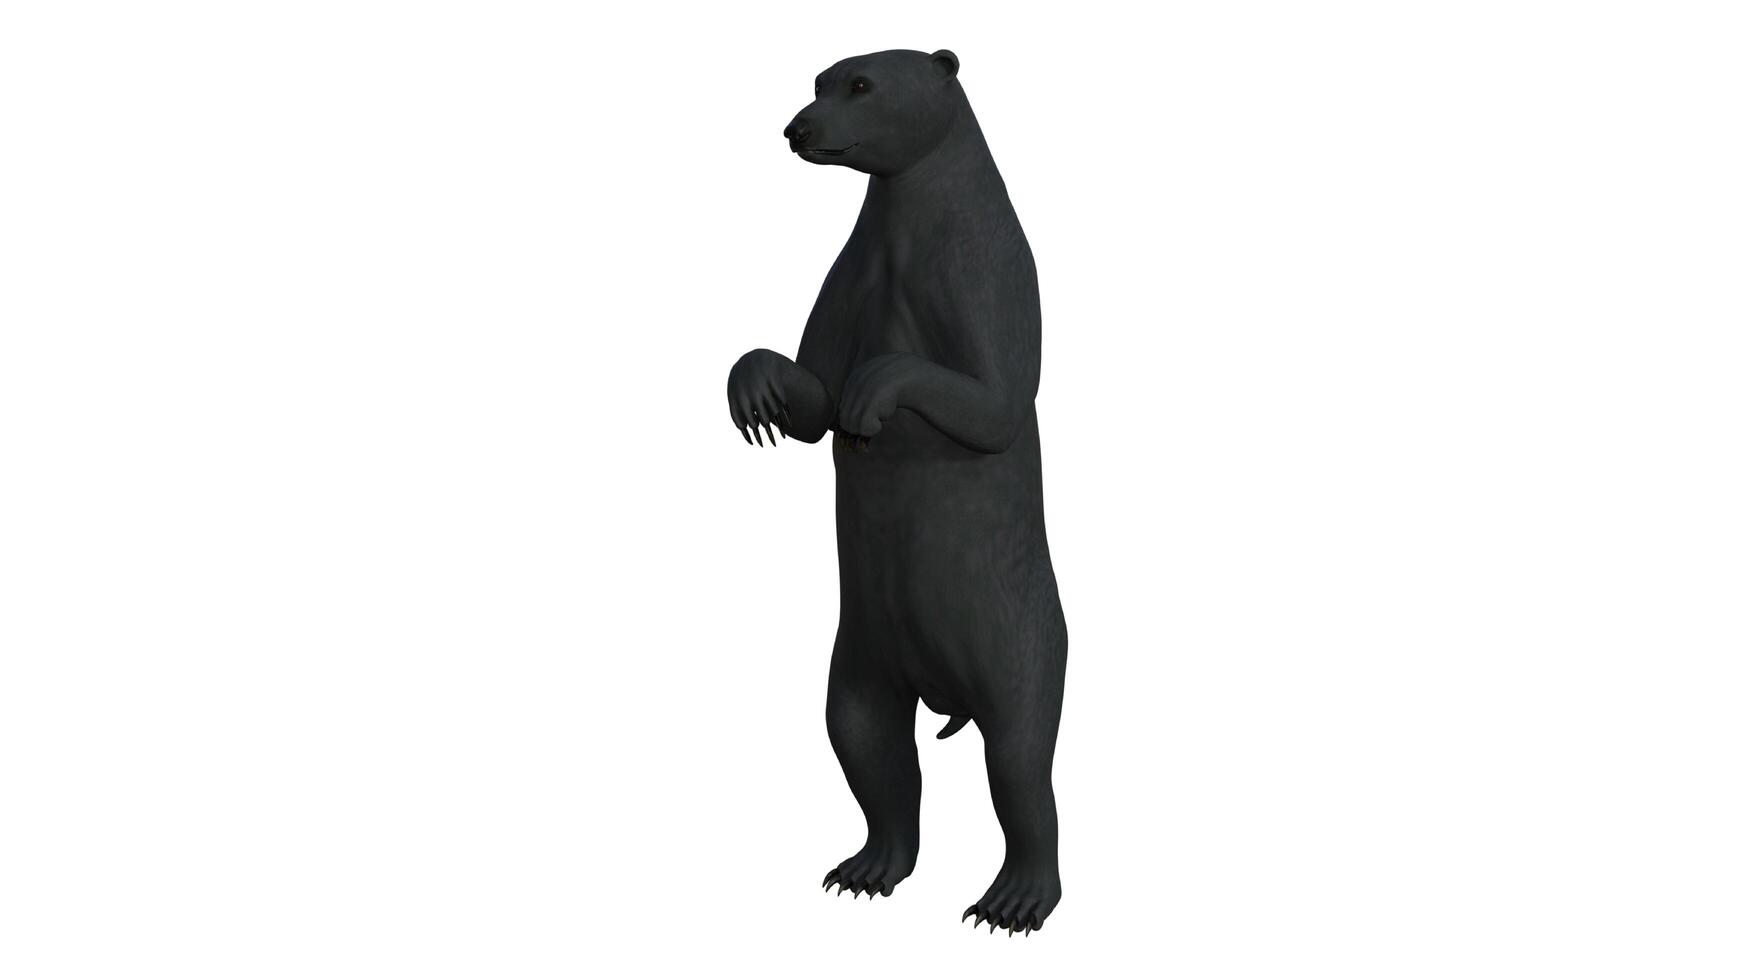 svart Björn på vit bakgrund foto